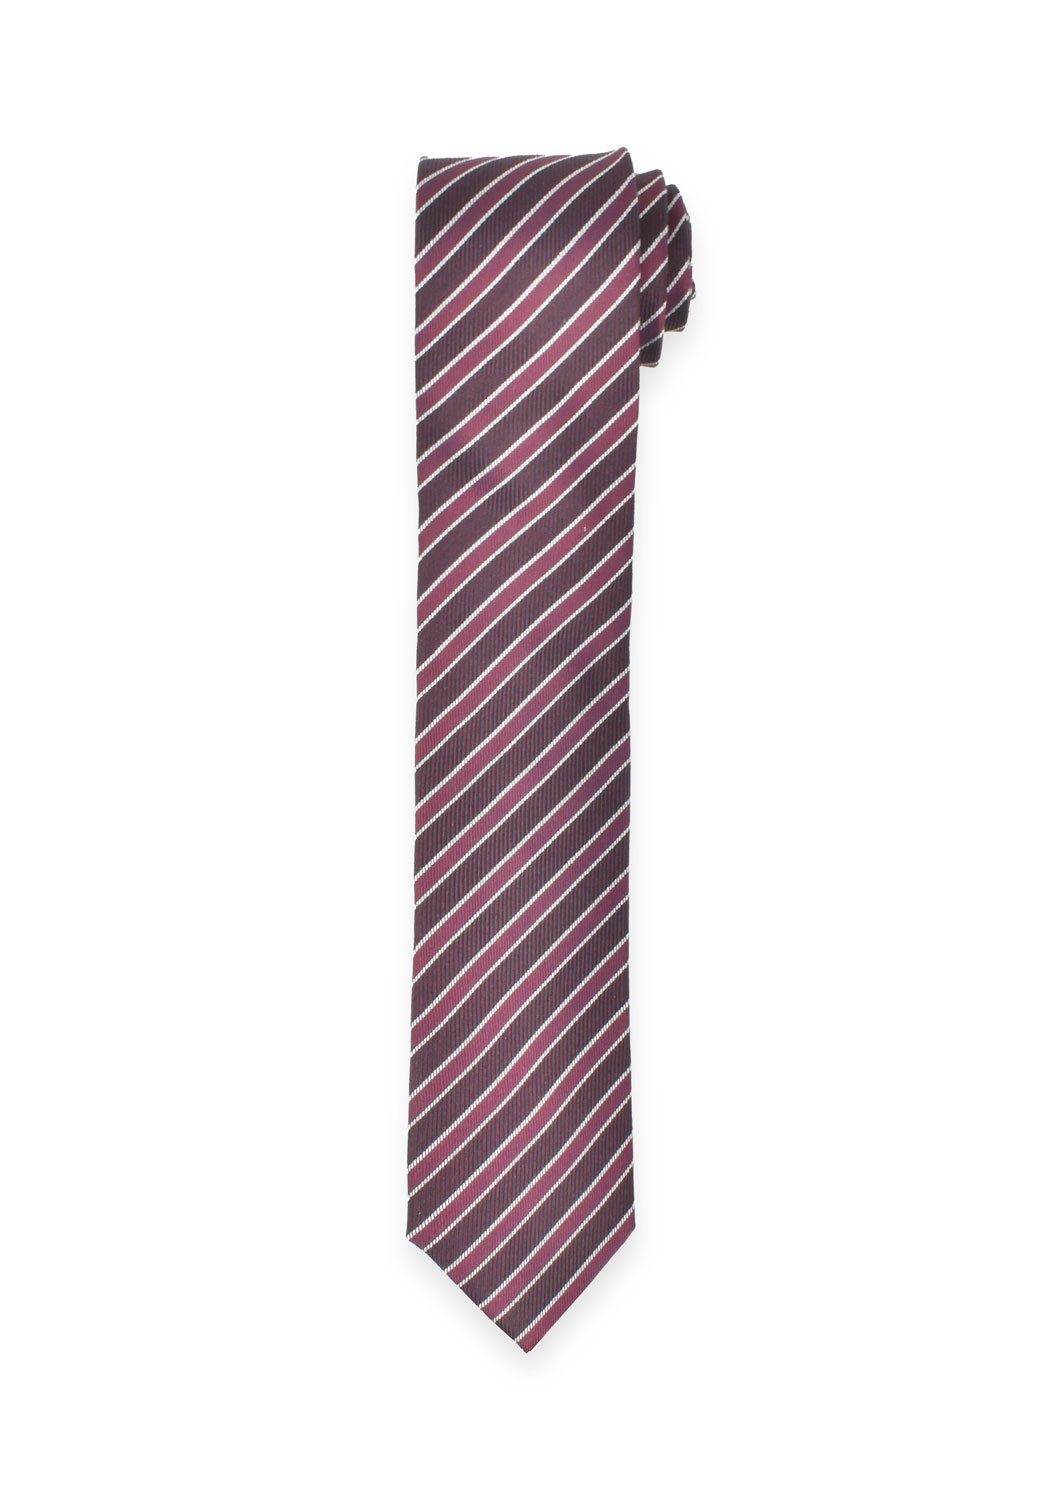 MARVELIS Krawatte Krawatte - Gestreift - Bordeaux/Rot - 6,5 cm